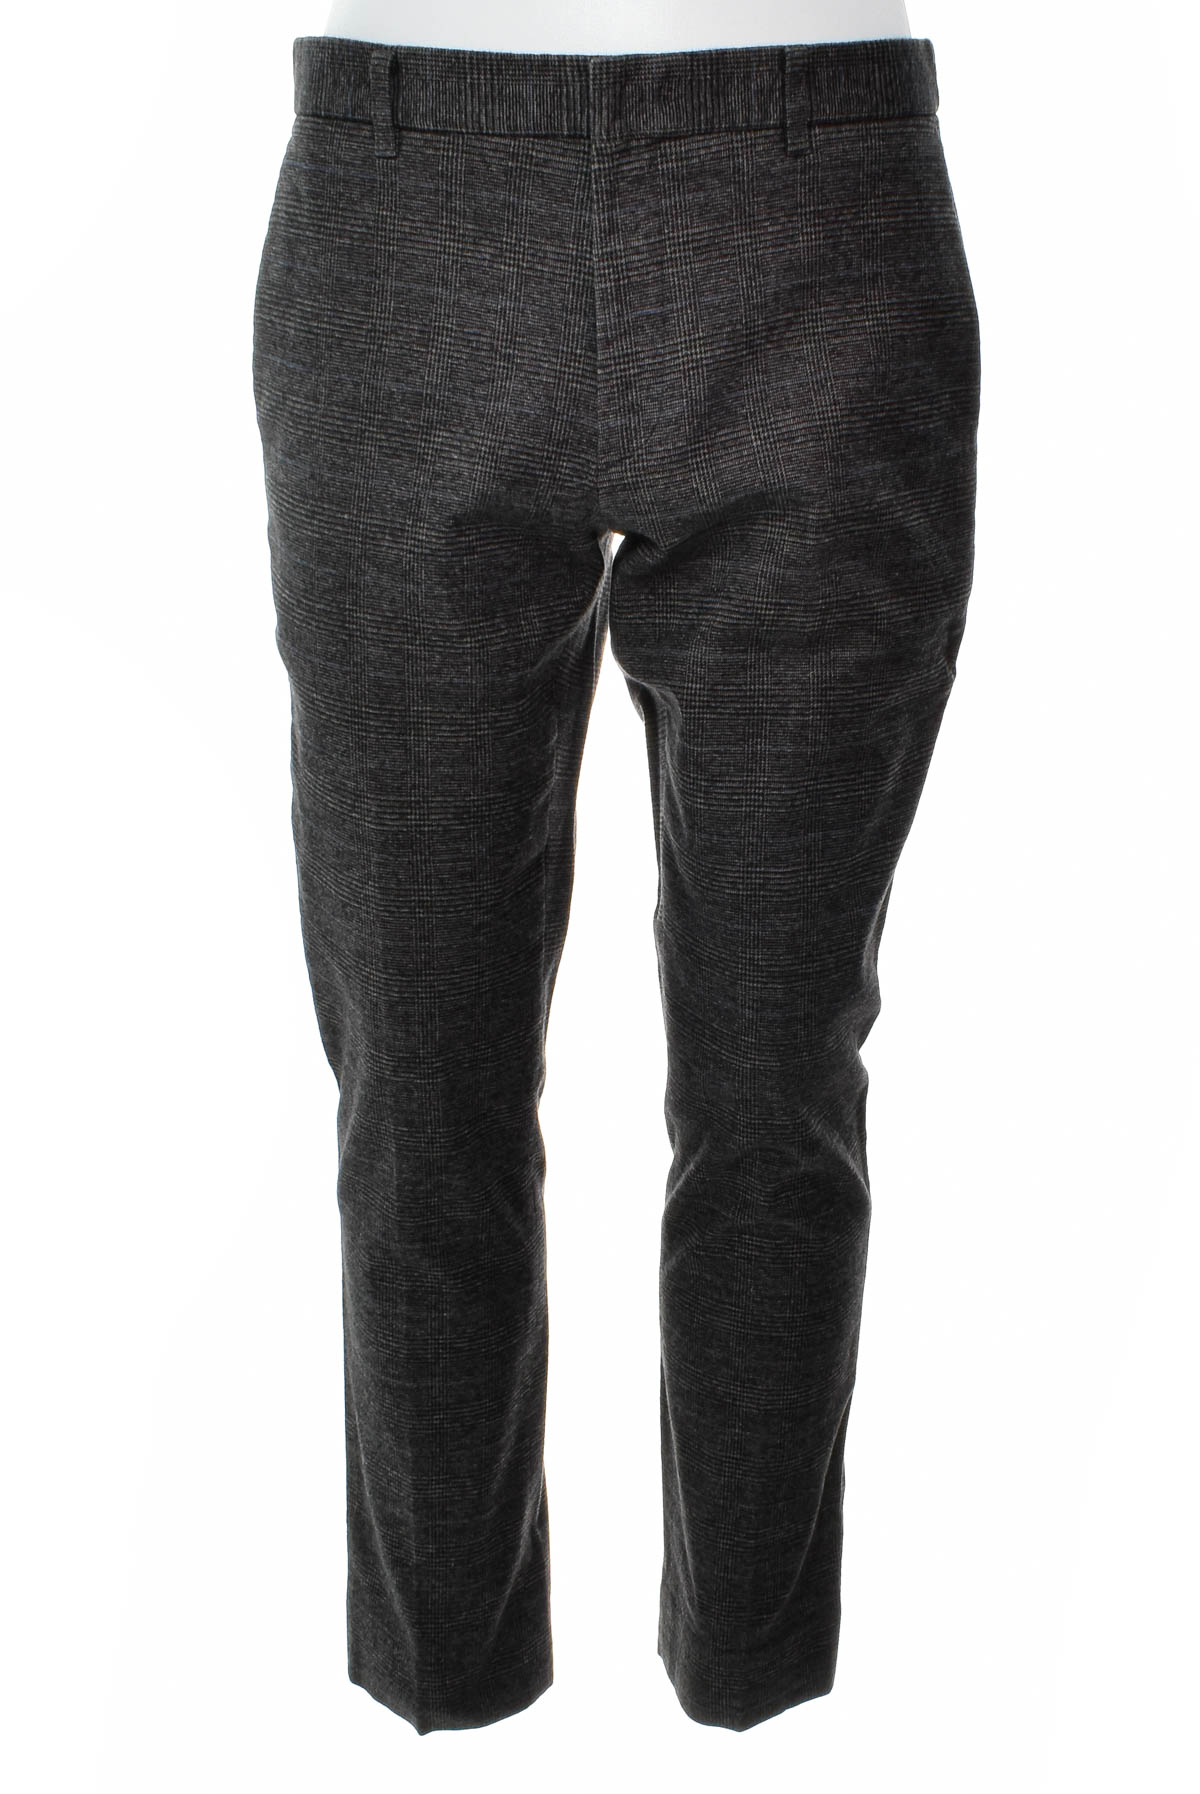 Men's trousers - Comodo SQUARE - 0